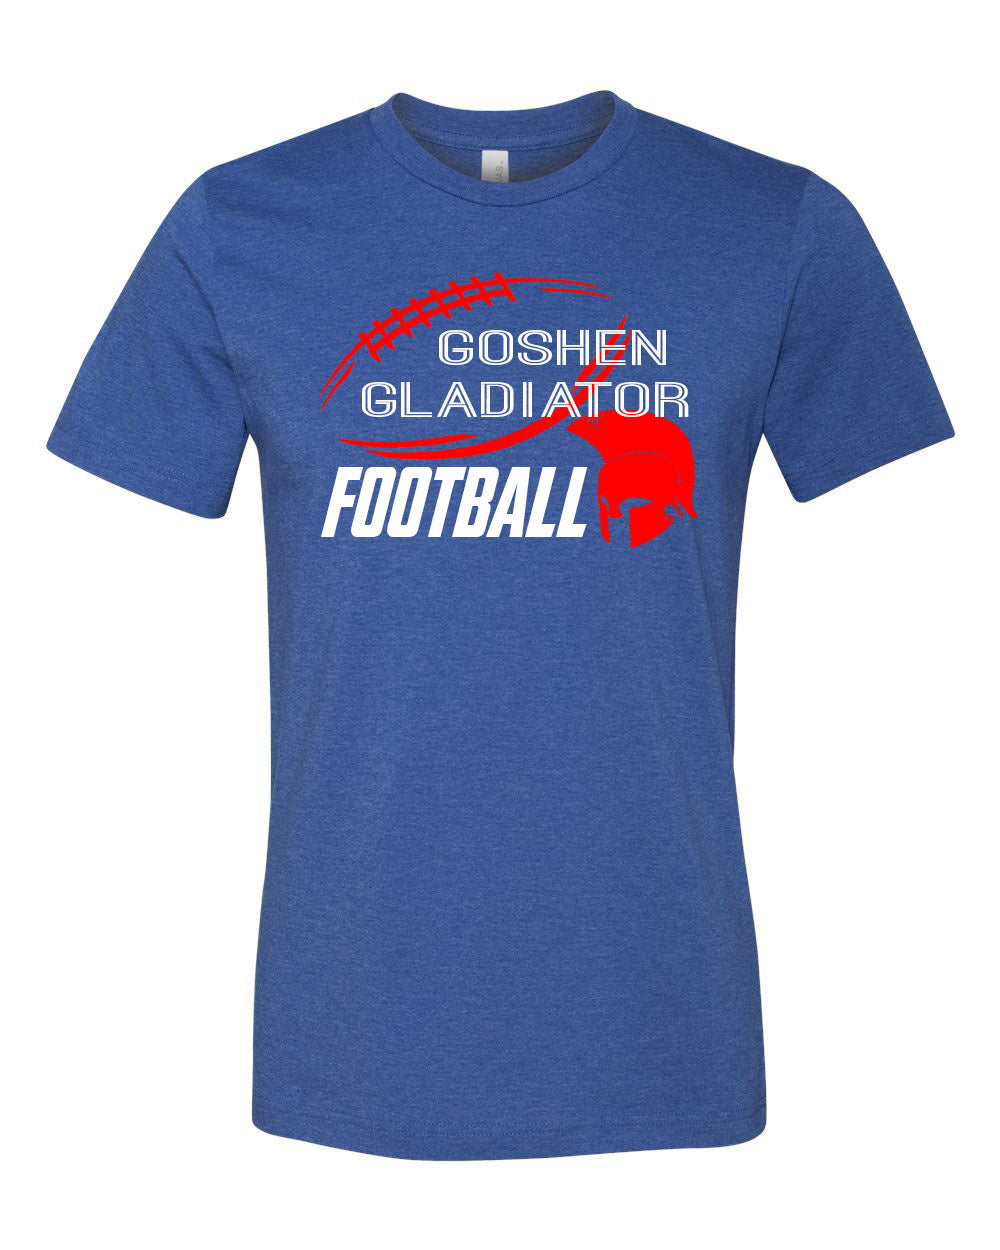 Gladiator Football Design 6 t-Shirt